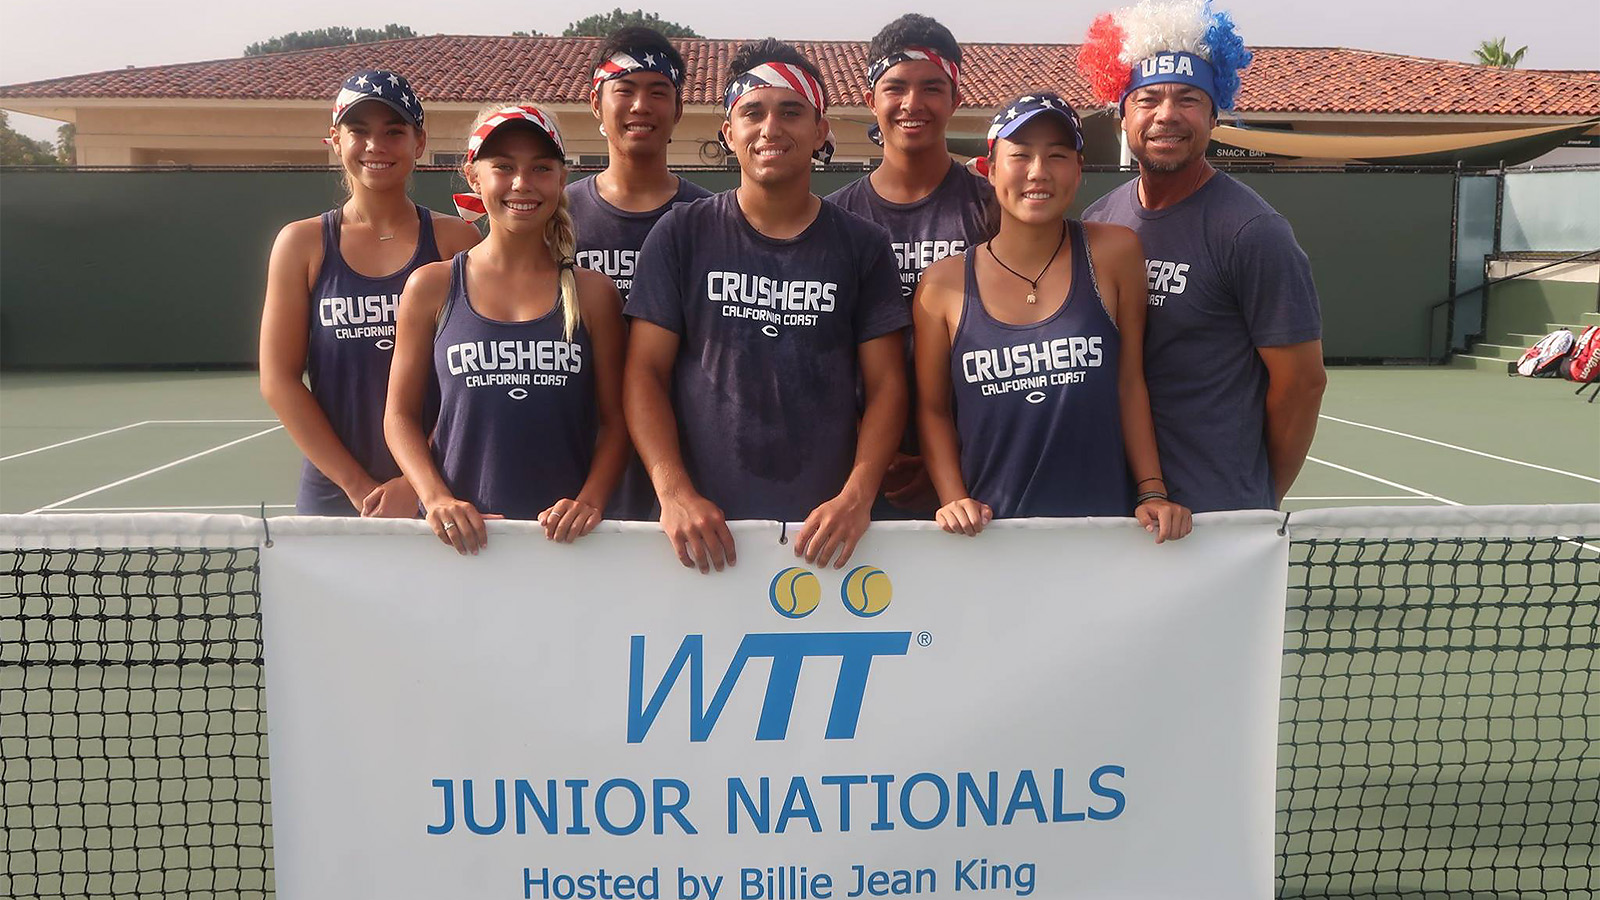 Wtt California Coast Crushers Capture First Wtt Junior Nationals Images, Photos, Reviews